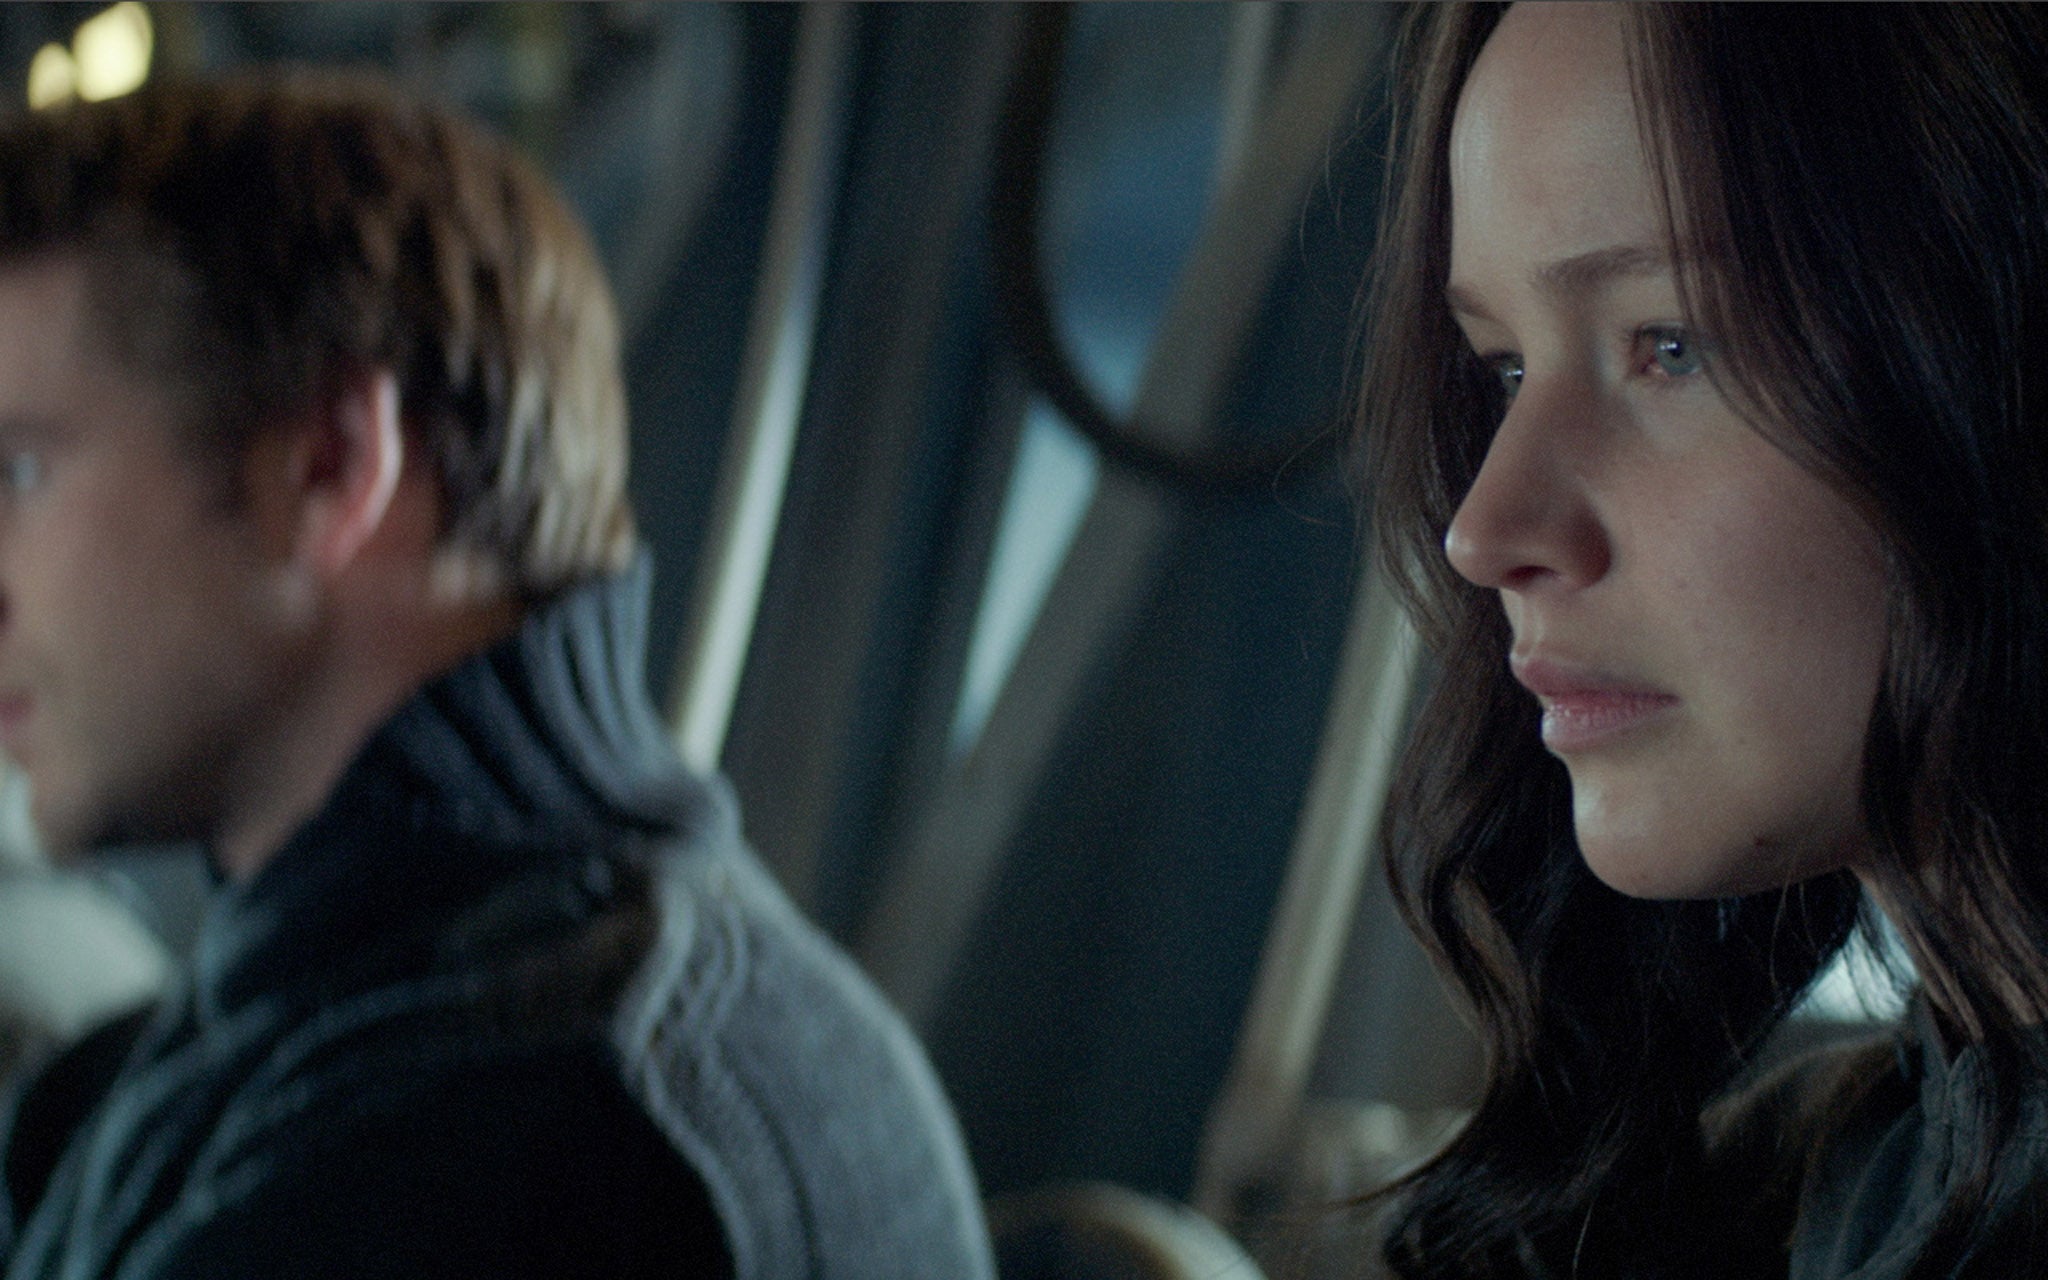 Jennifer Lawrence stars as Katniss Everdeen in The Hunger Games: Mockingjay Part 1